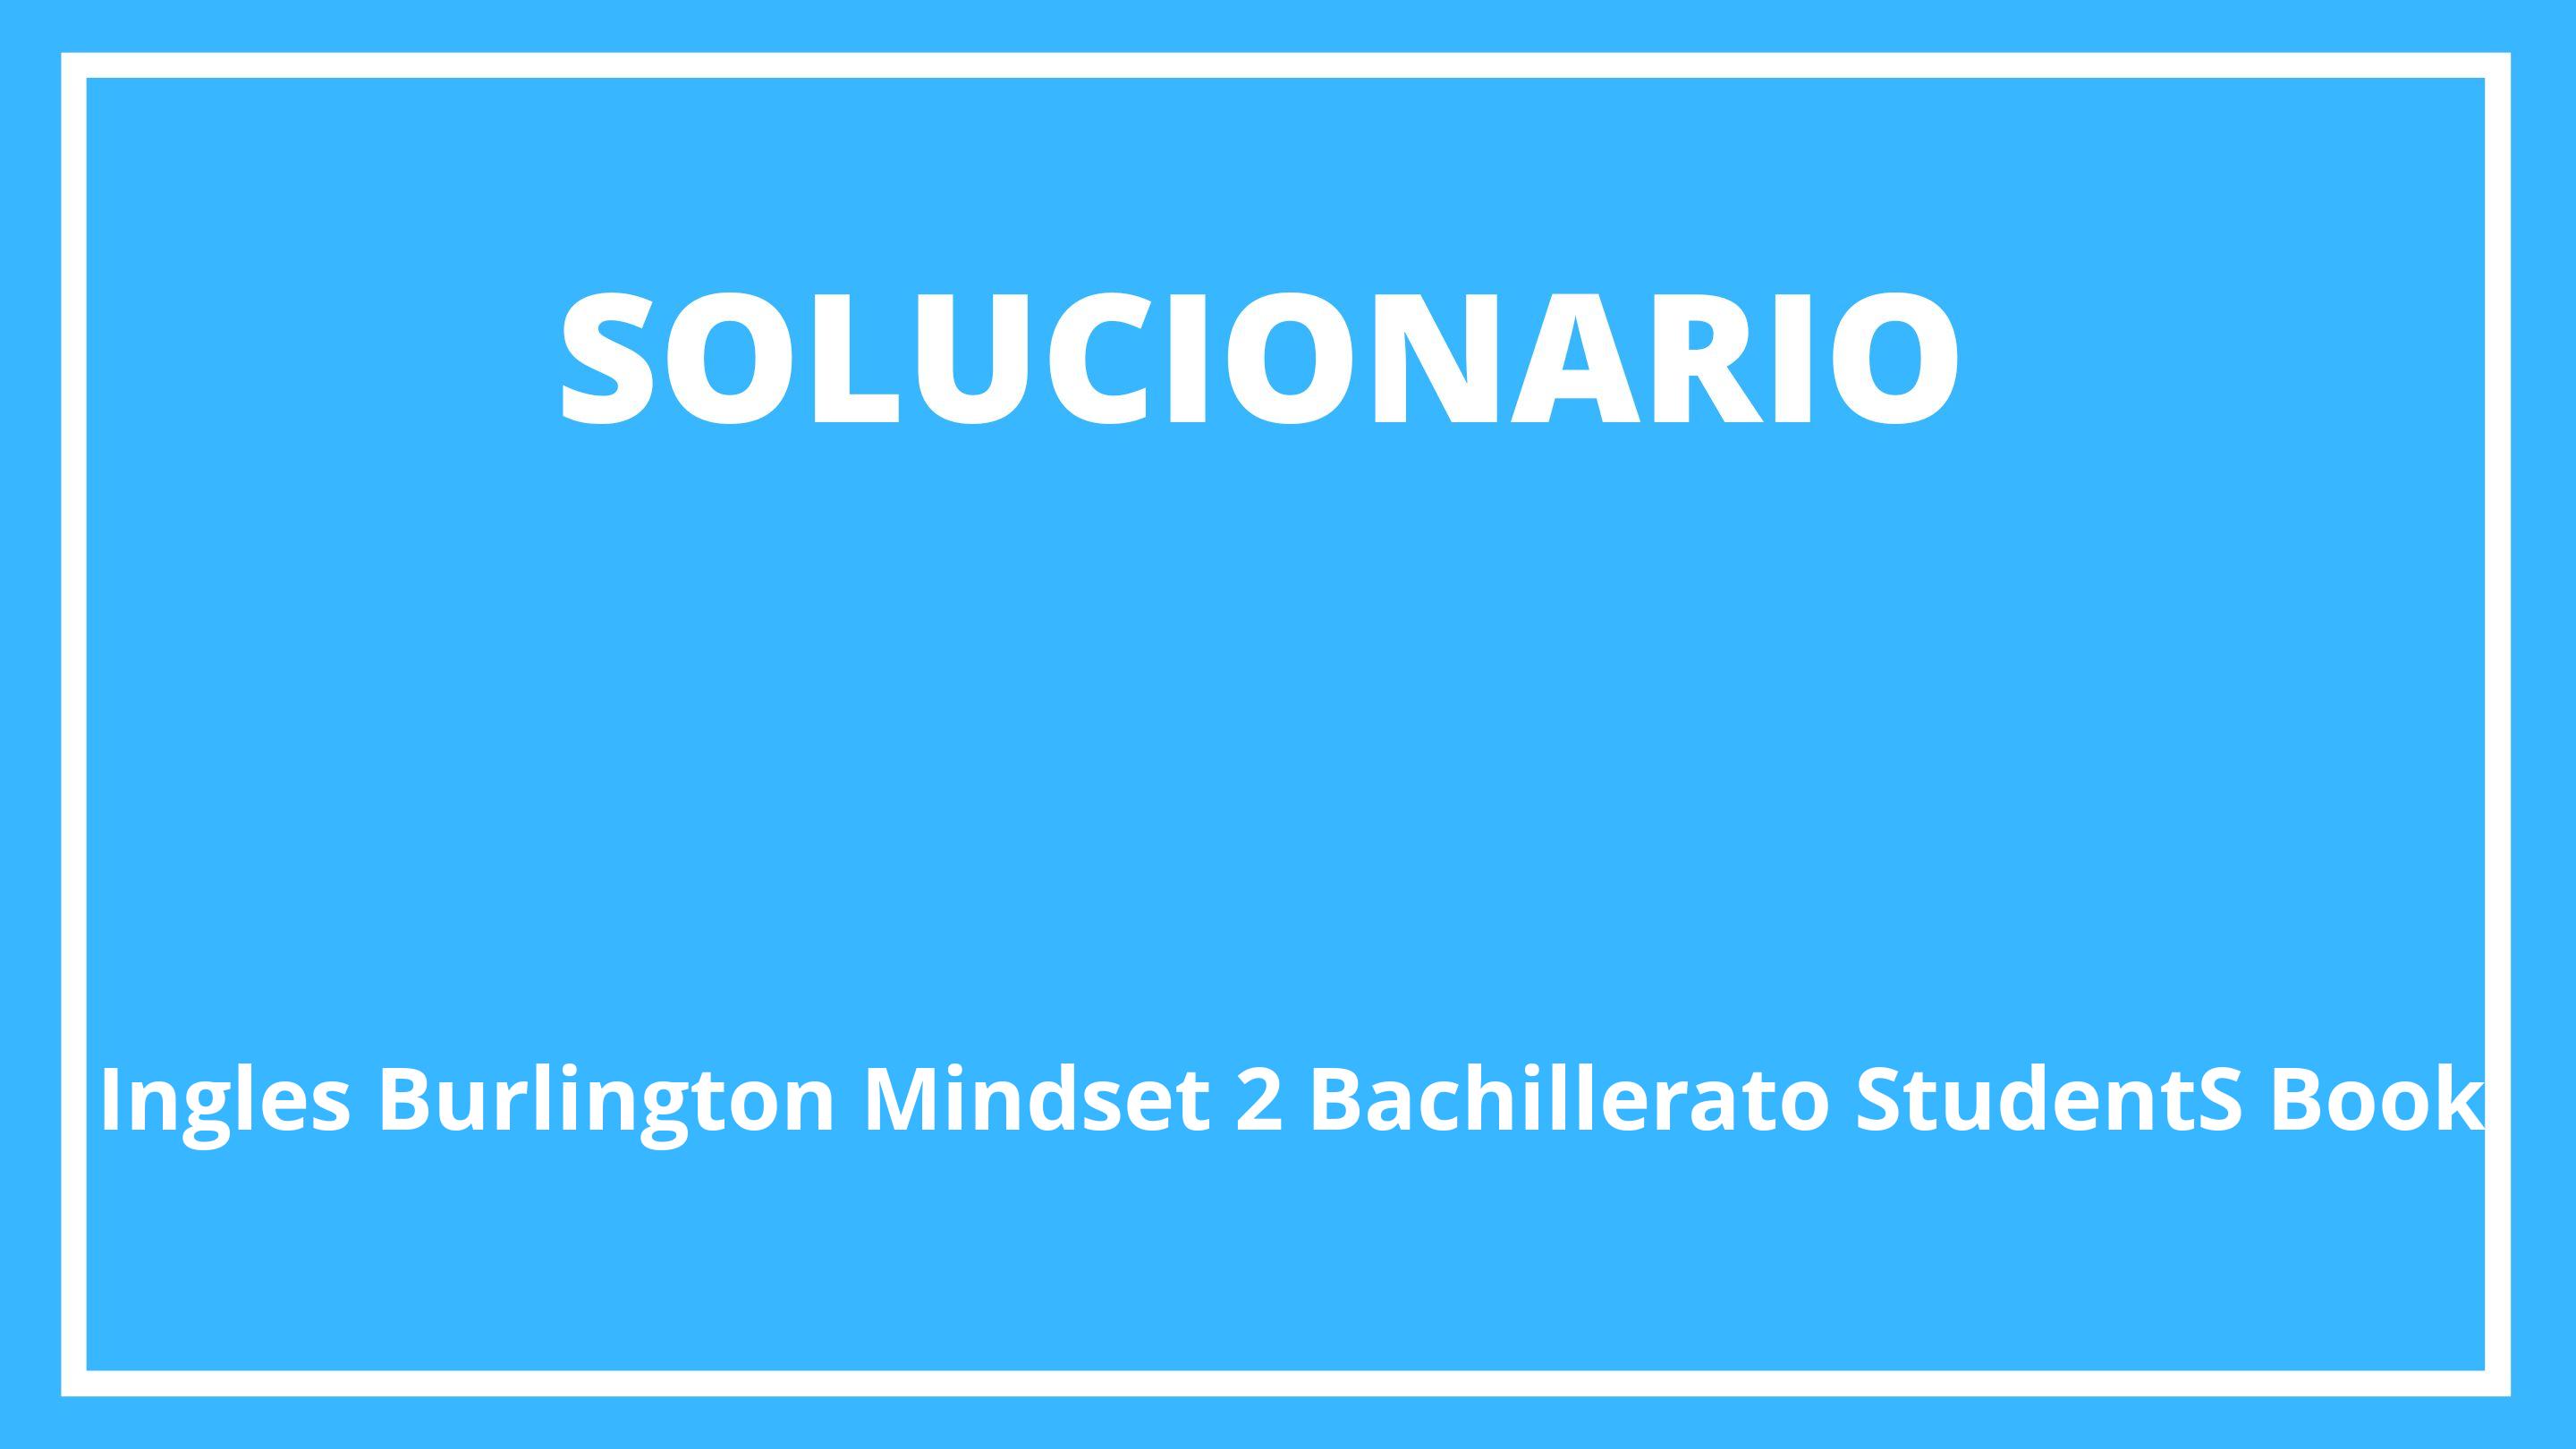 Solucionario Ingles Burlington Mindset 2 Bachillerato Student'S Book